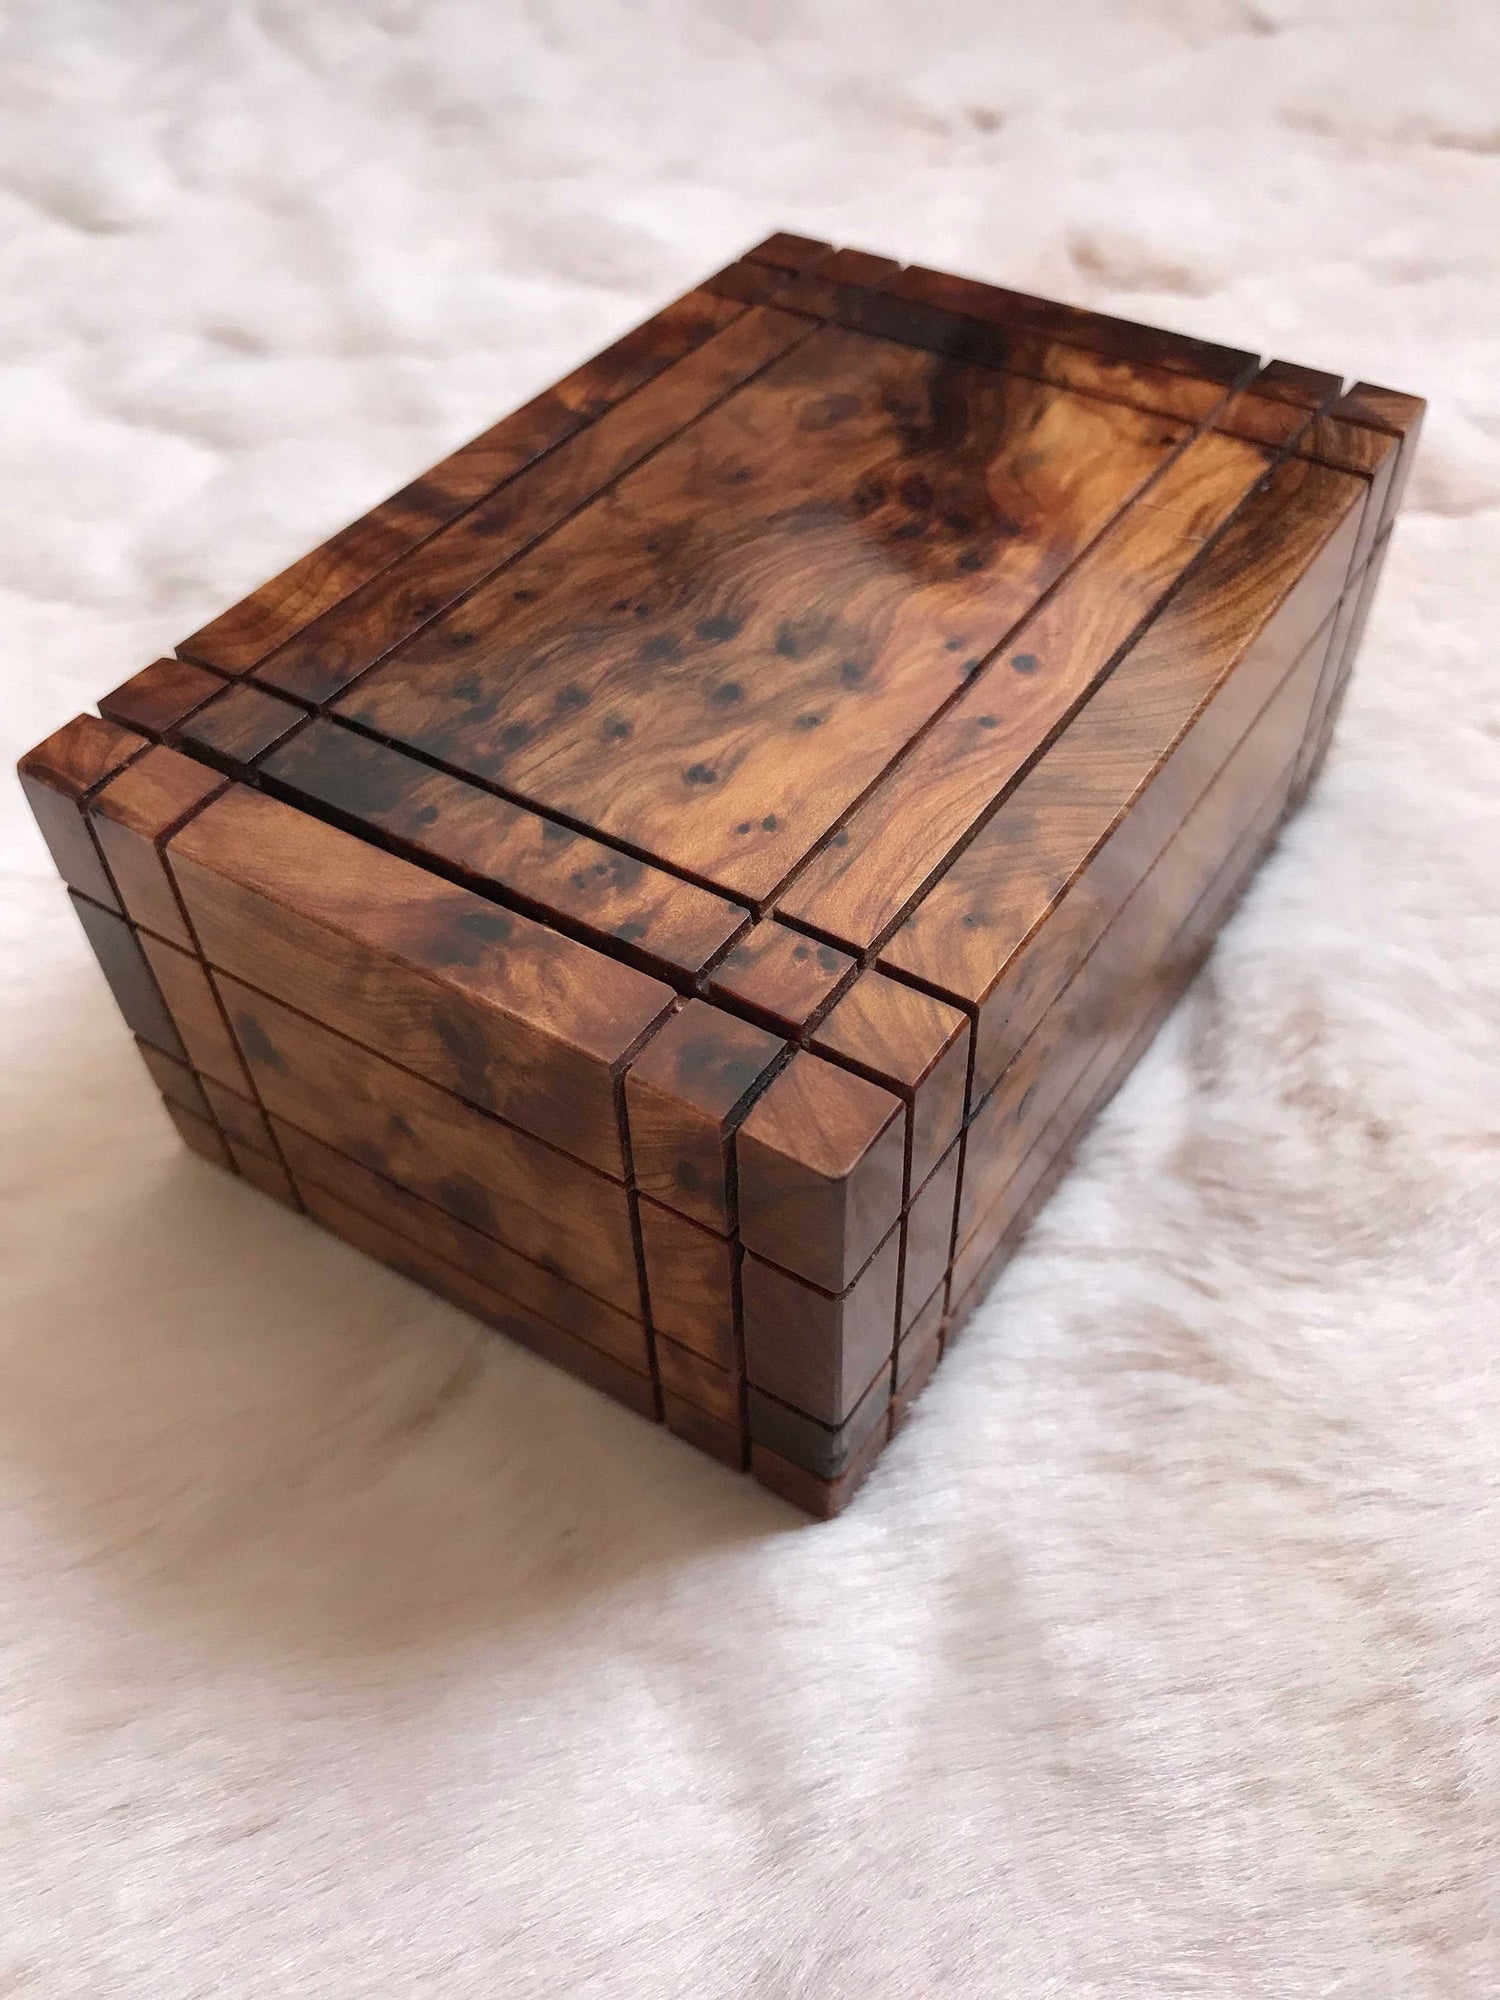 4"x3" Burl secret thuya wooden box,high quality thuya wood,magic opening box,secret lock box,jewellery small thuya wooden handmade box